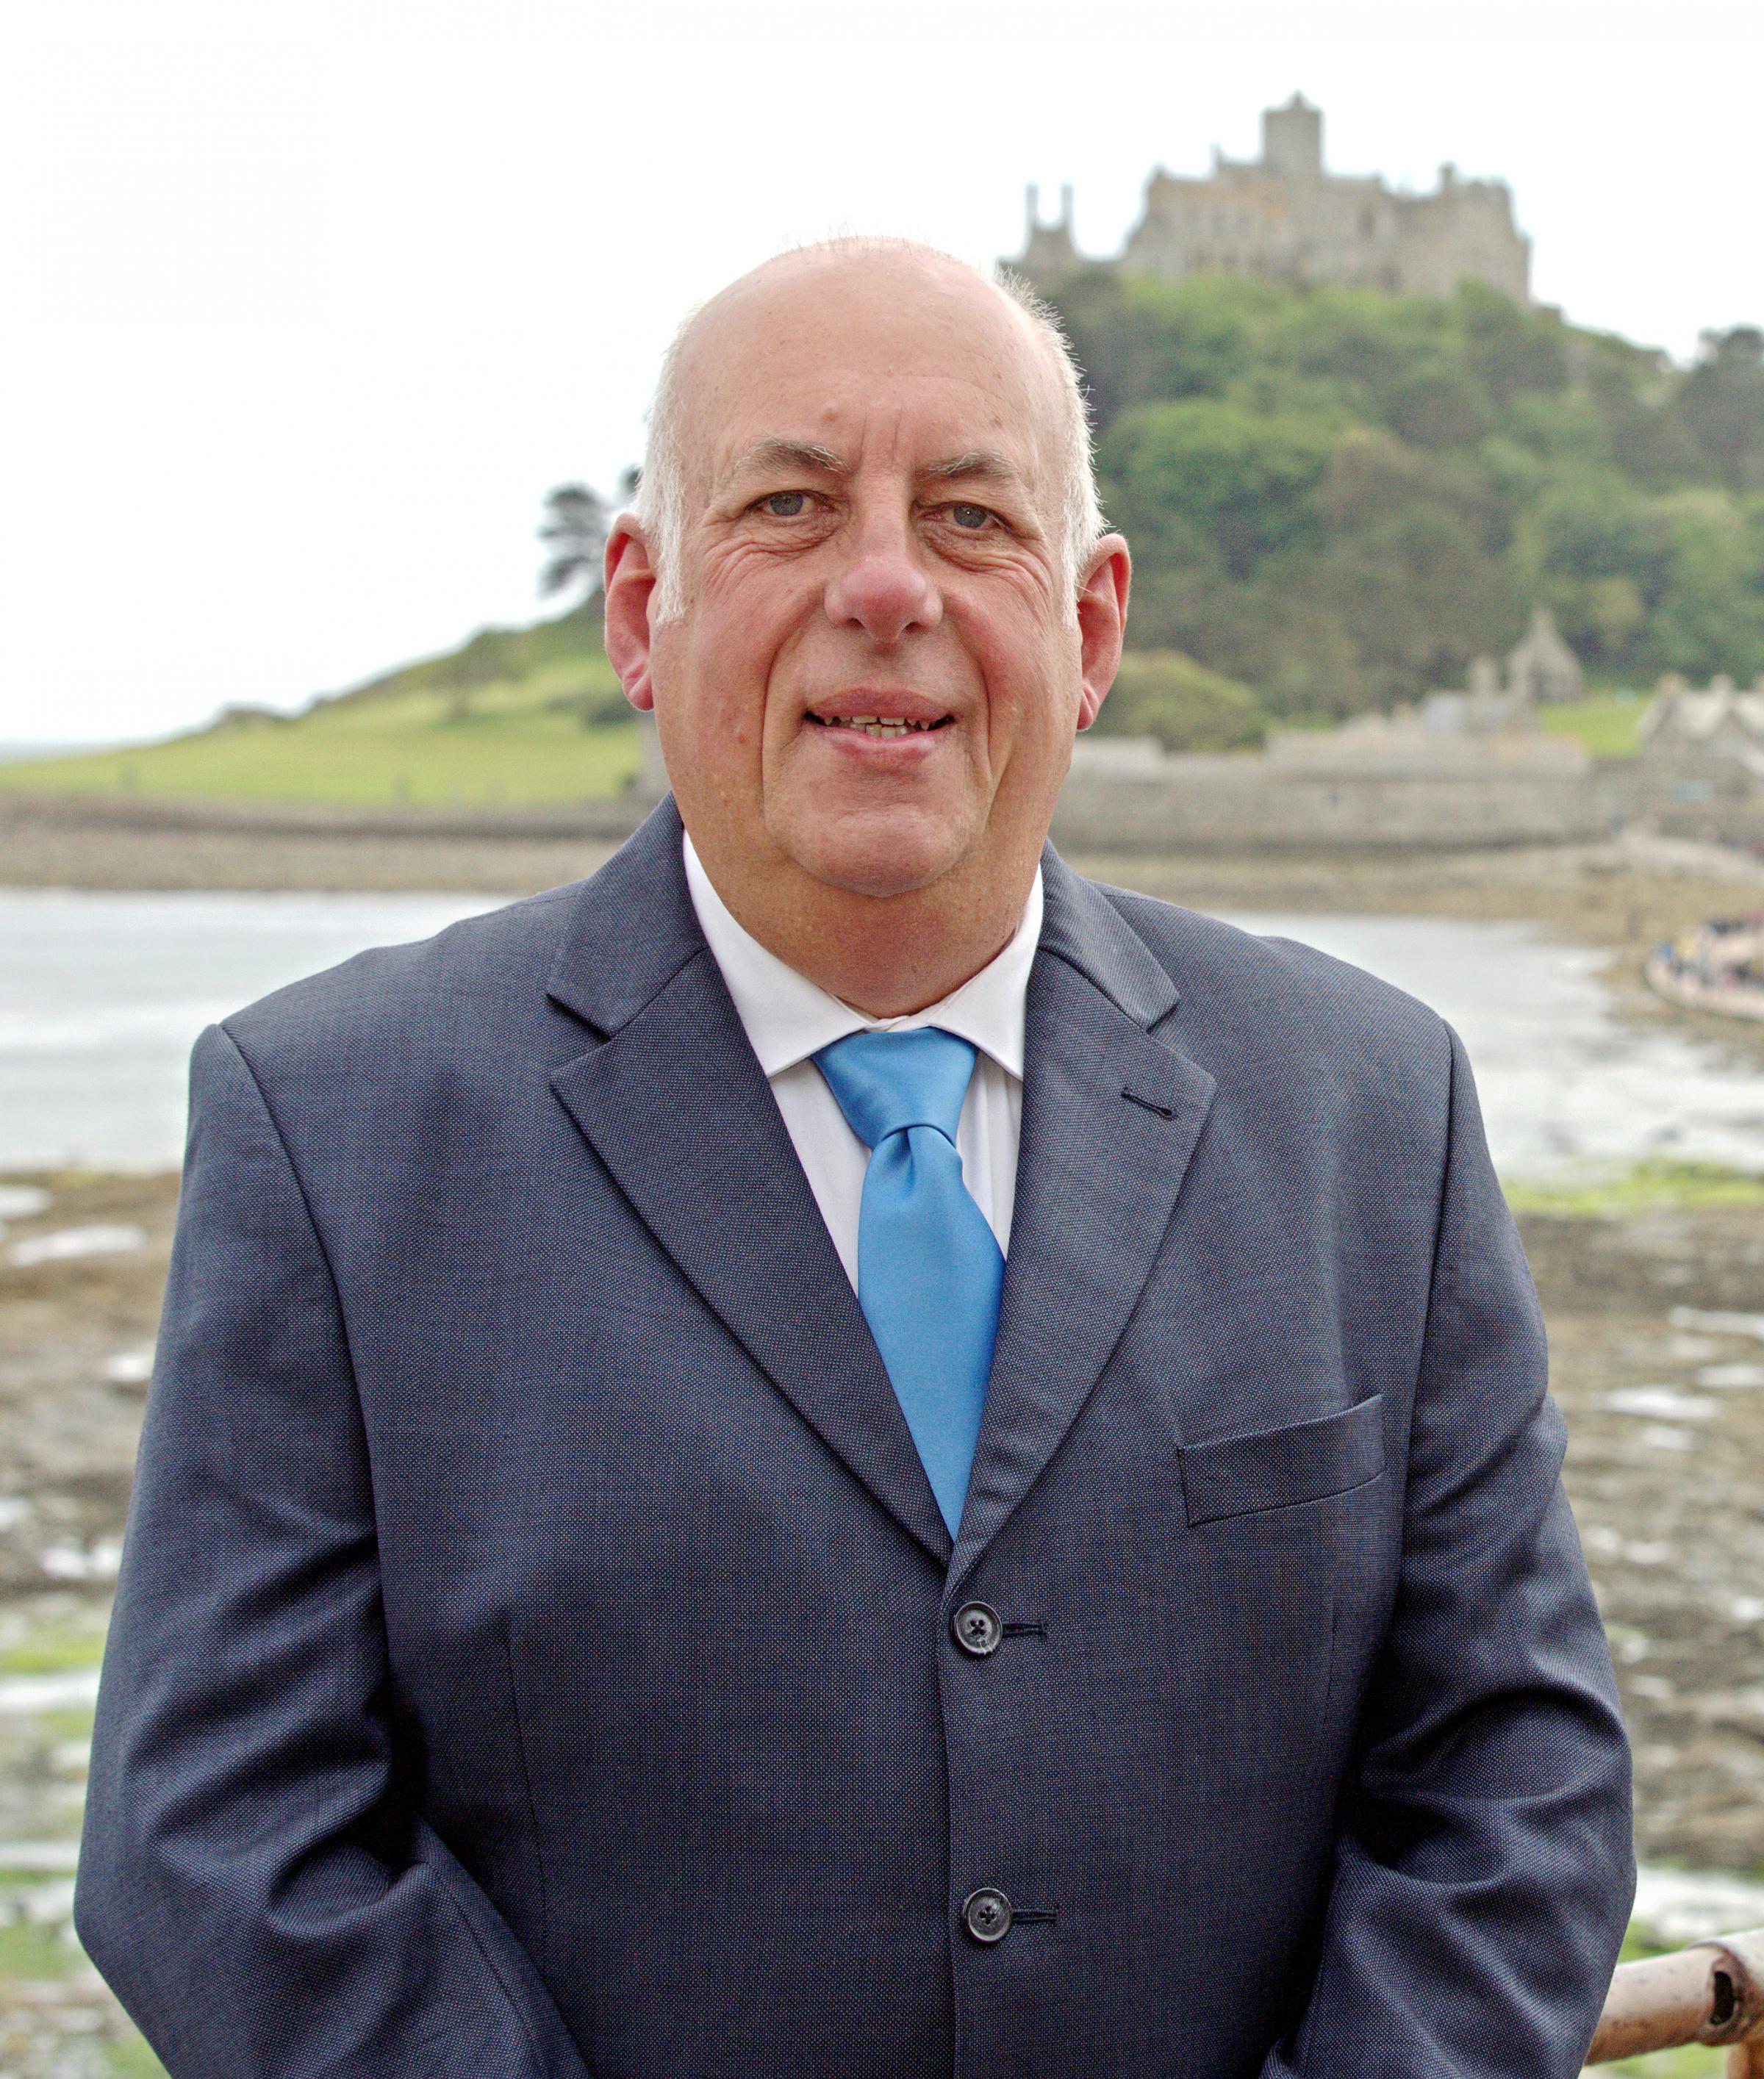 Giane Mortimer, the Reform UK candidate for St Ives